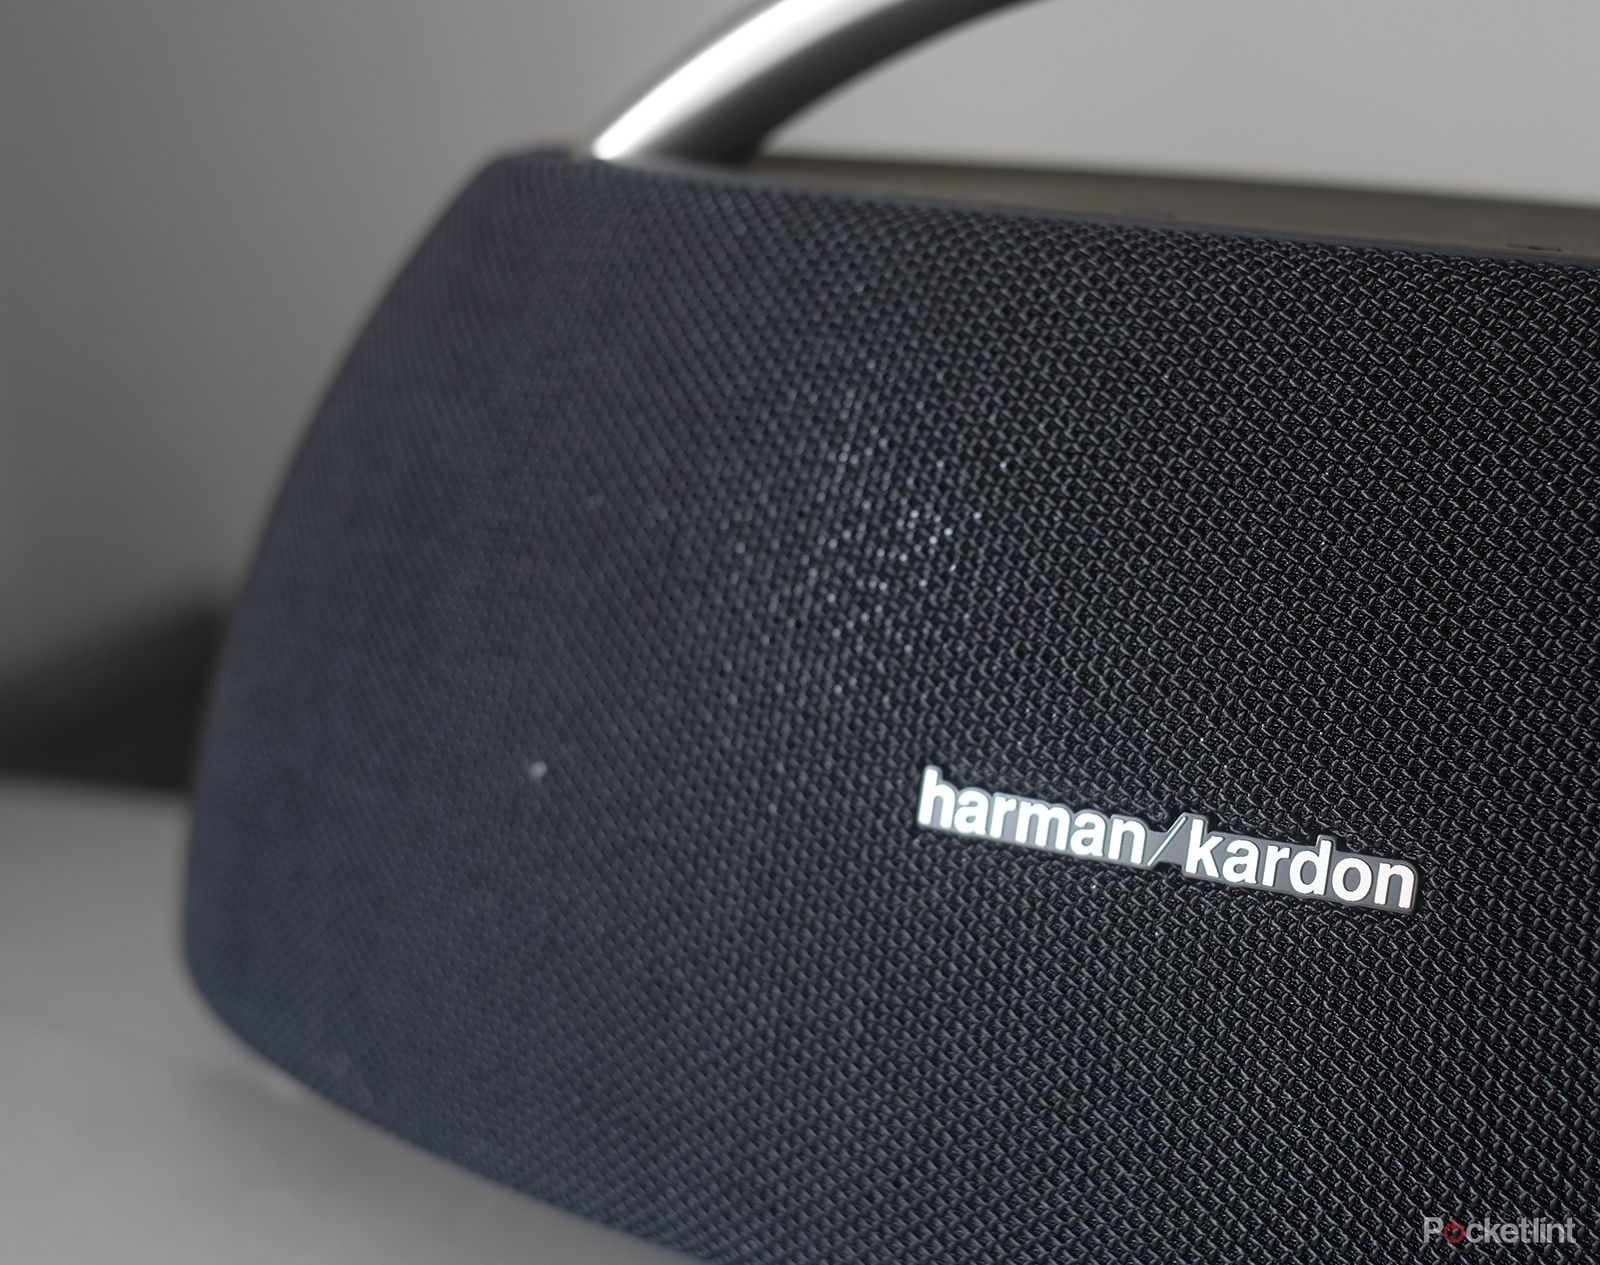 harman kardon go play review image 3